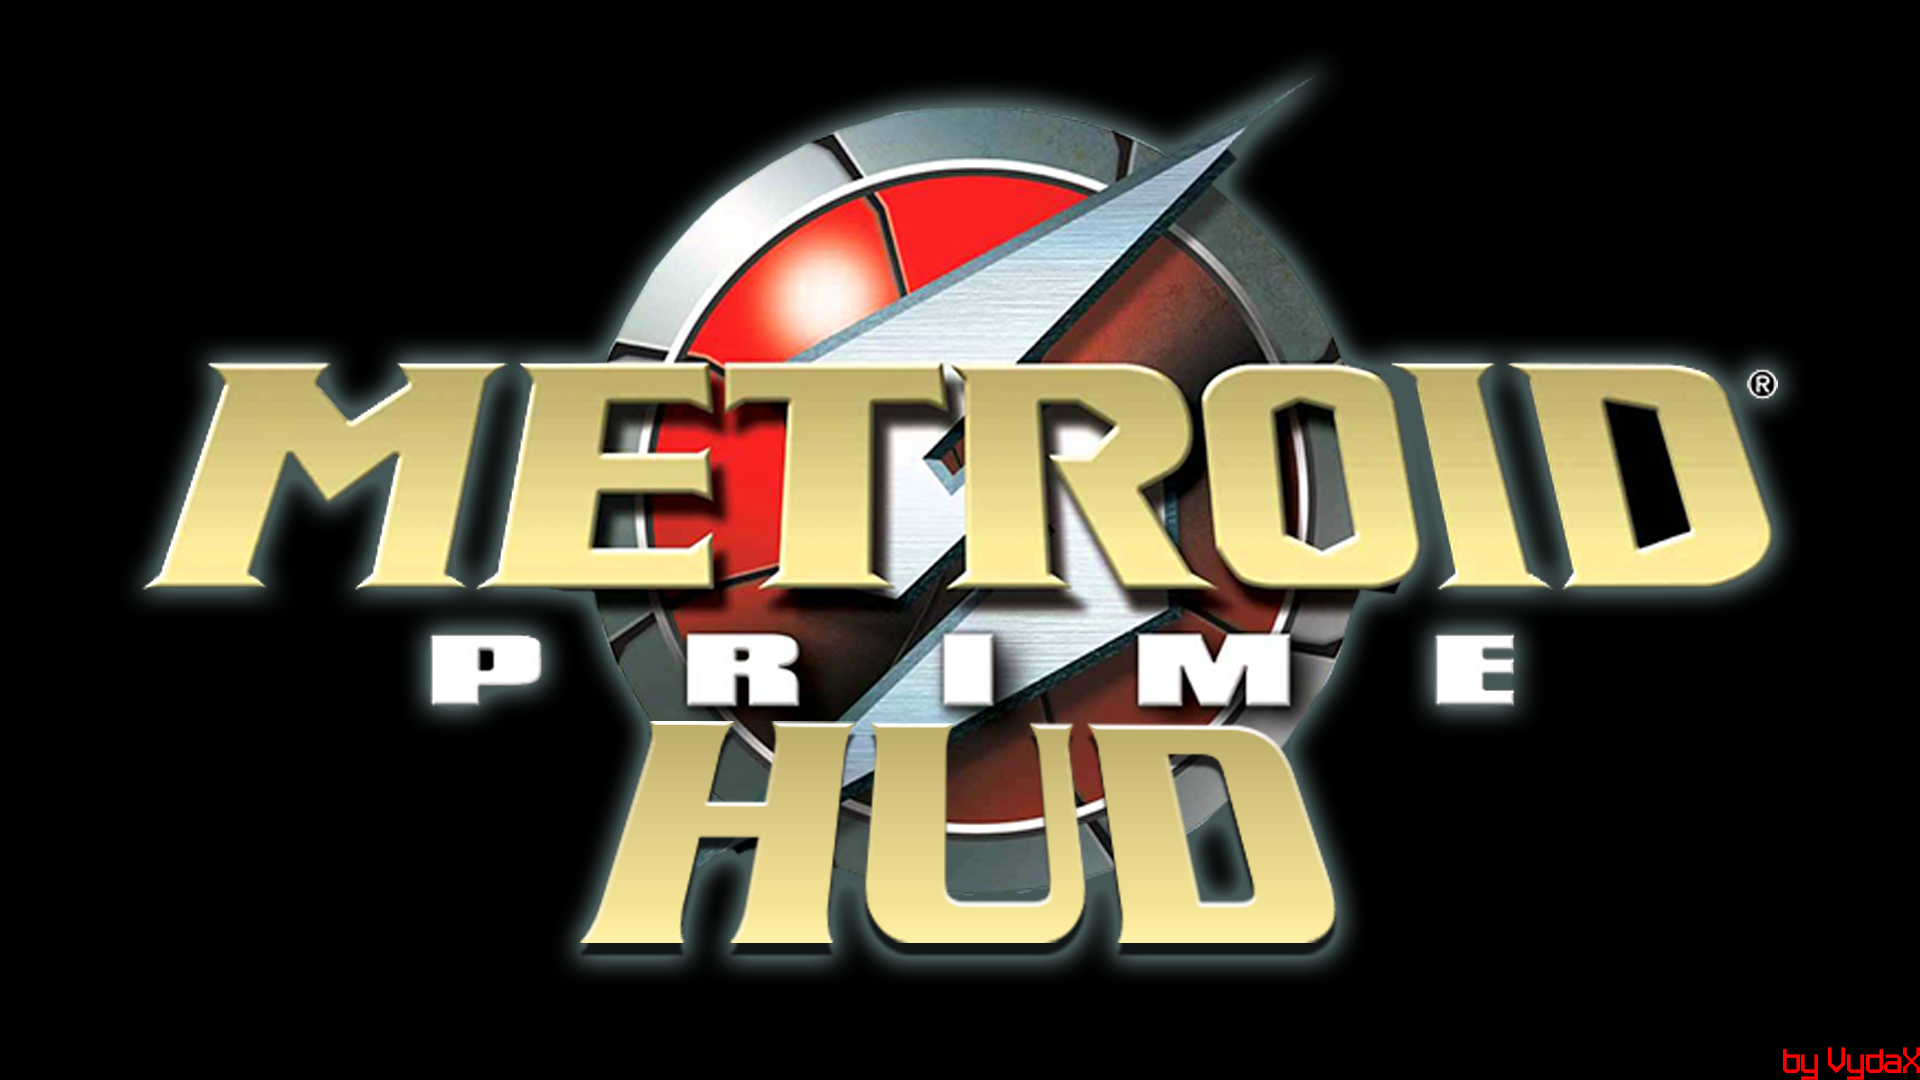 Metroid Prime HUD